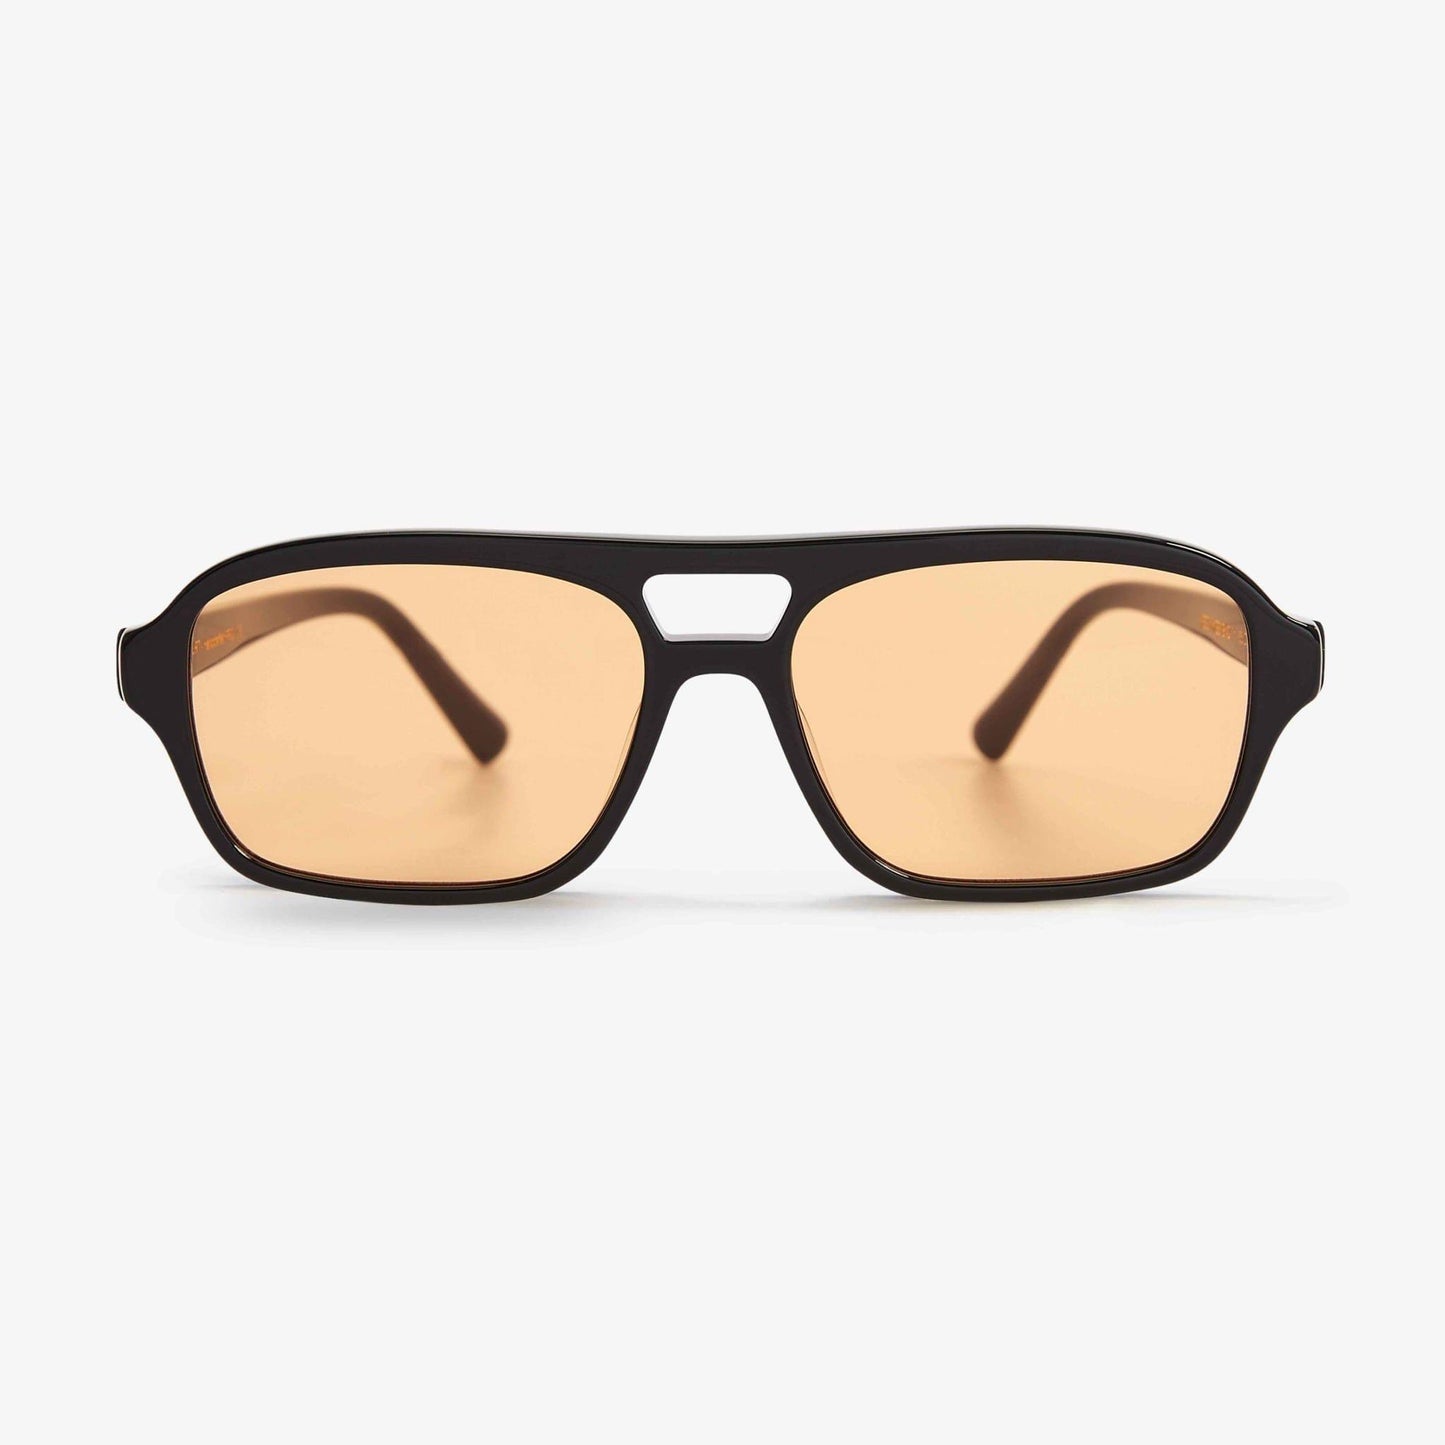 Burt, Geometric sunglasses for men and women orange lens UV400 protection